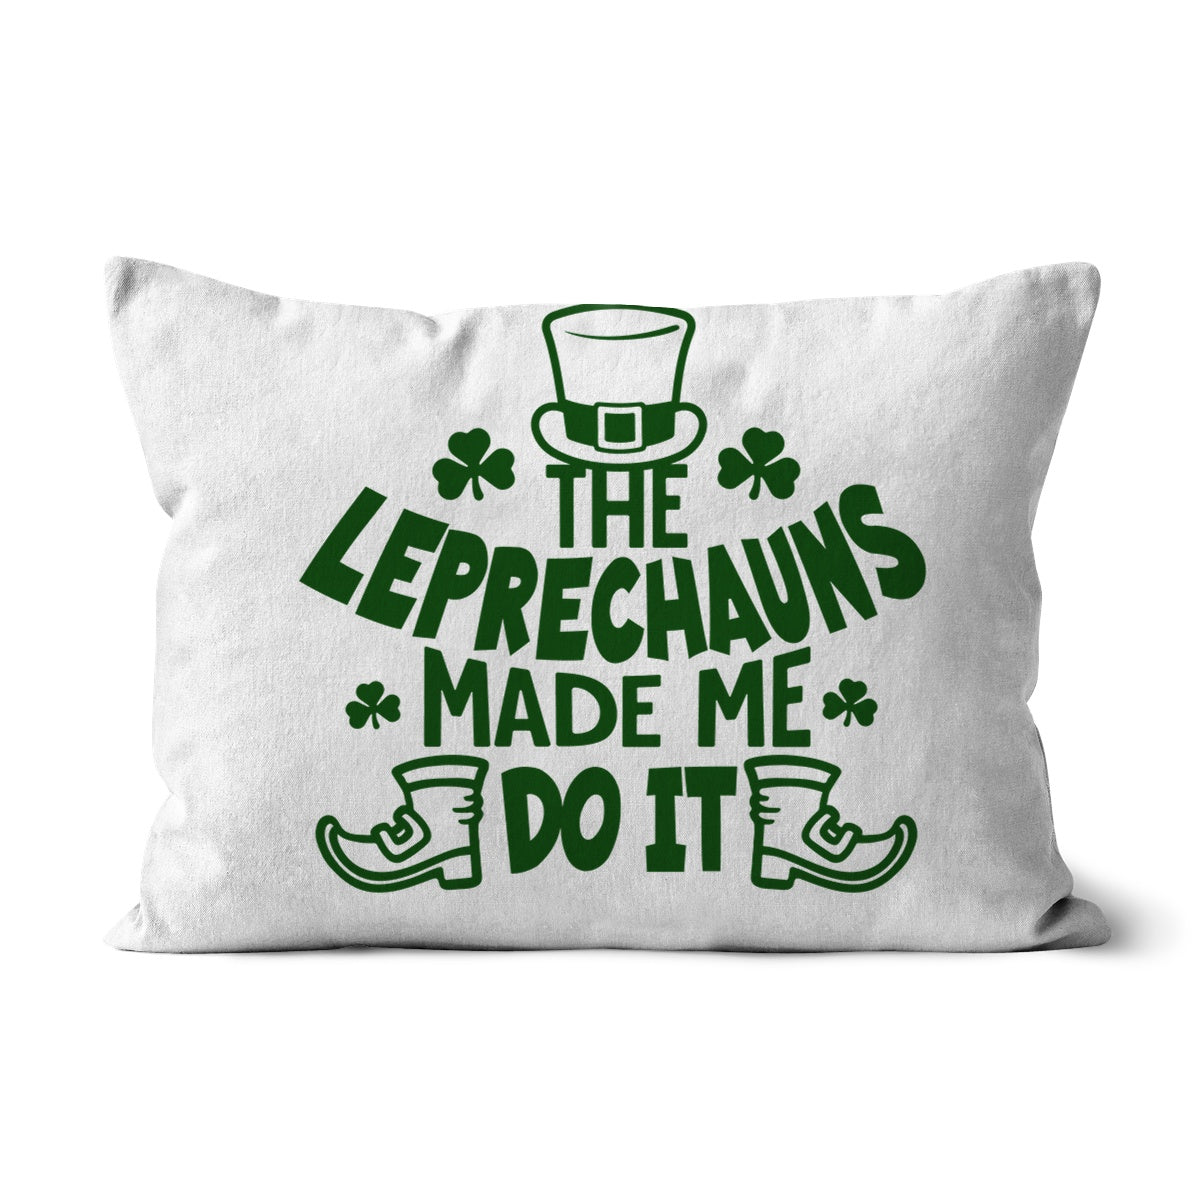 The Leprechauns made me do it! Cushion